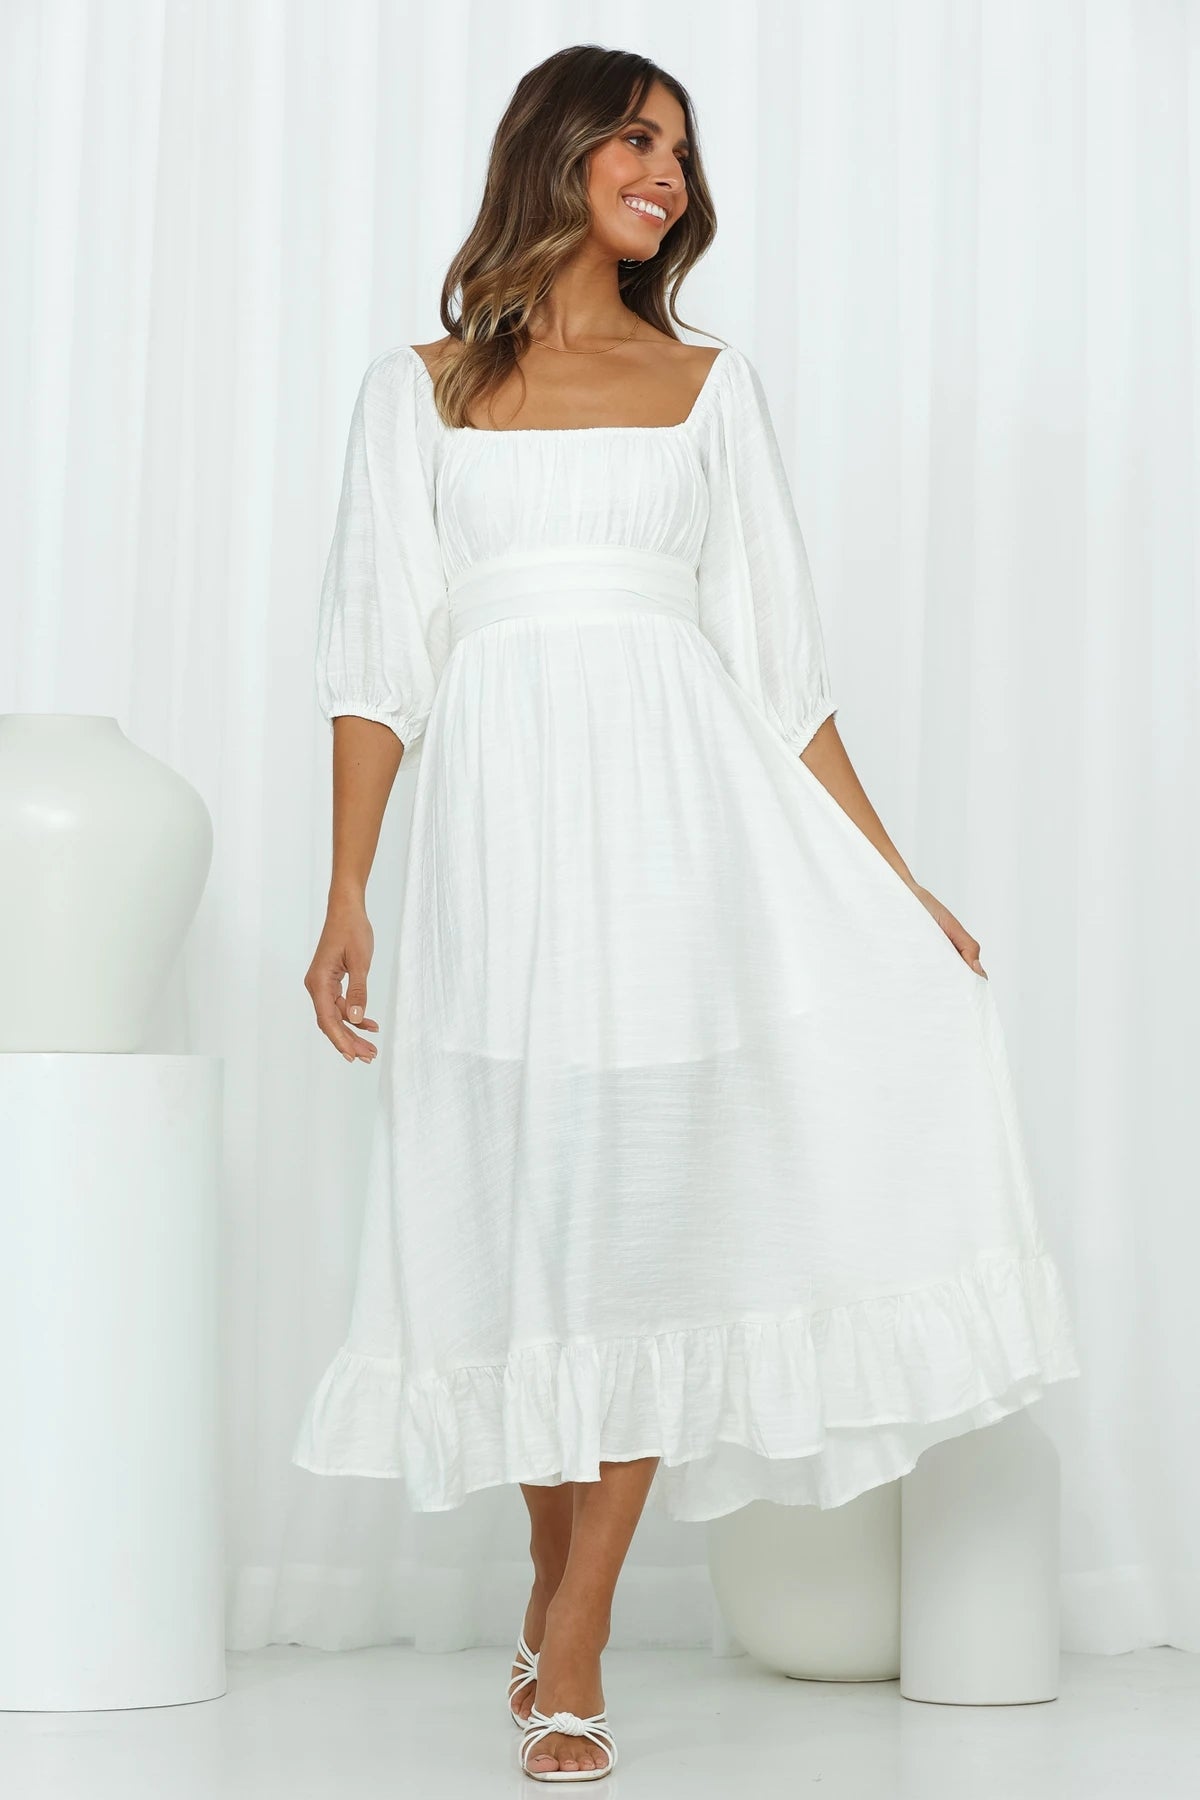 2022  Spring New Gentle Stylish round Neck Short Sleeve High Waist Backless Ruffled Dress for Women Maxi Dress